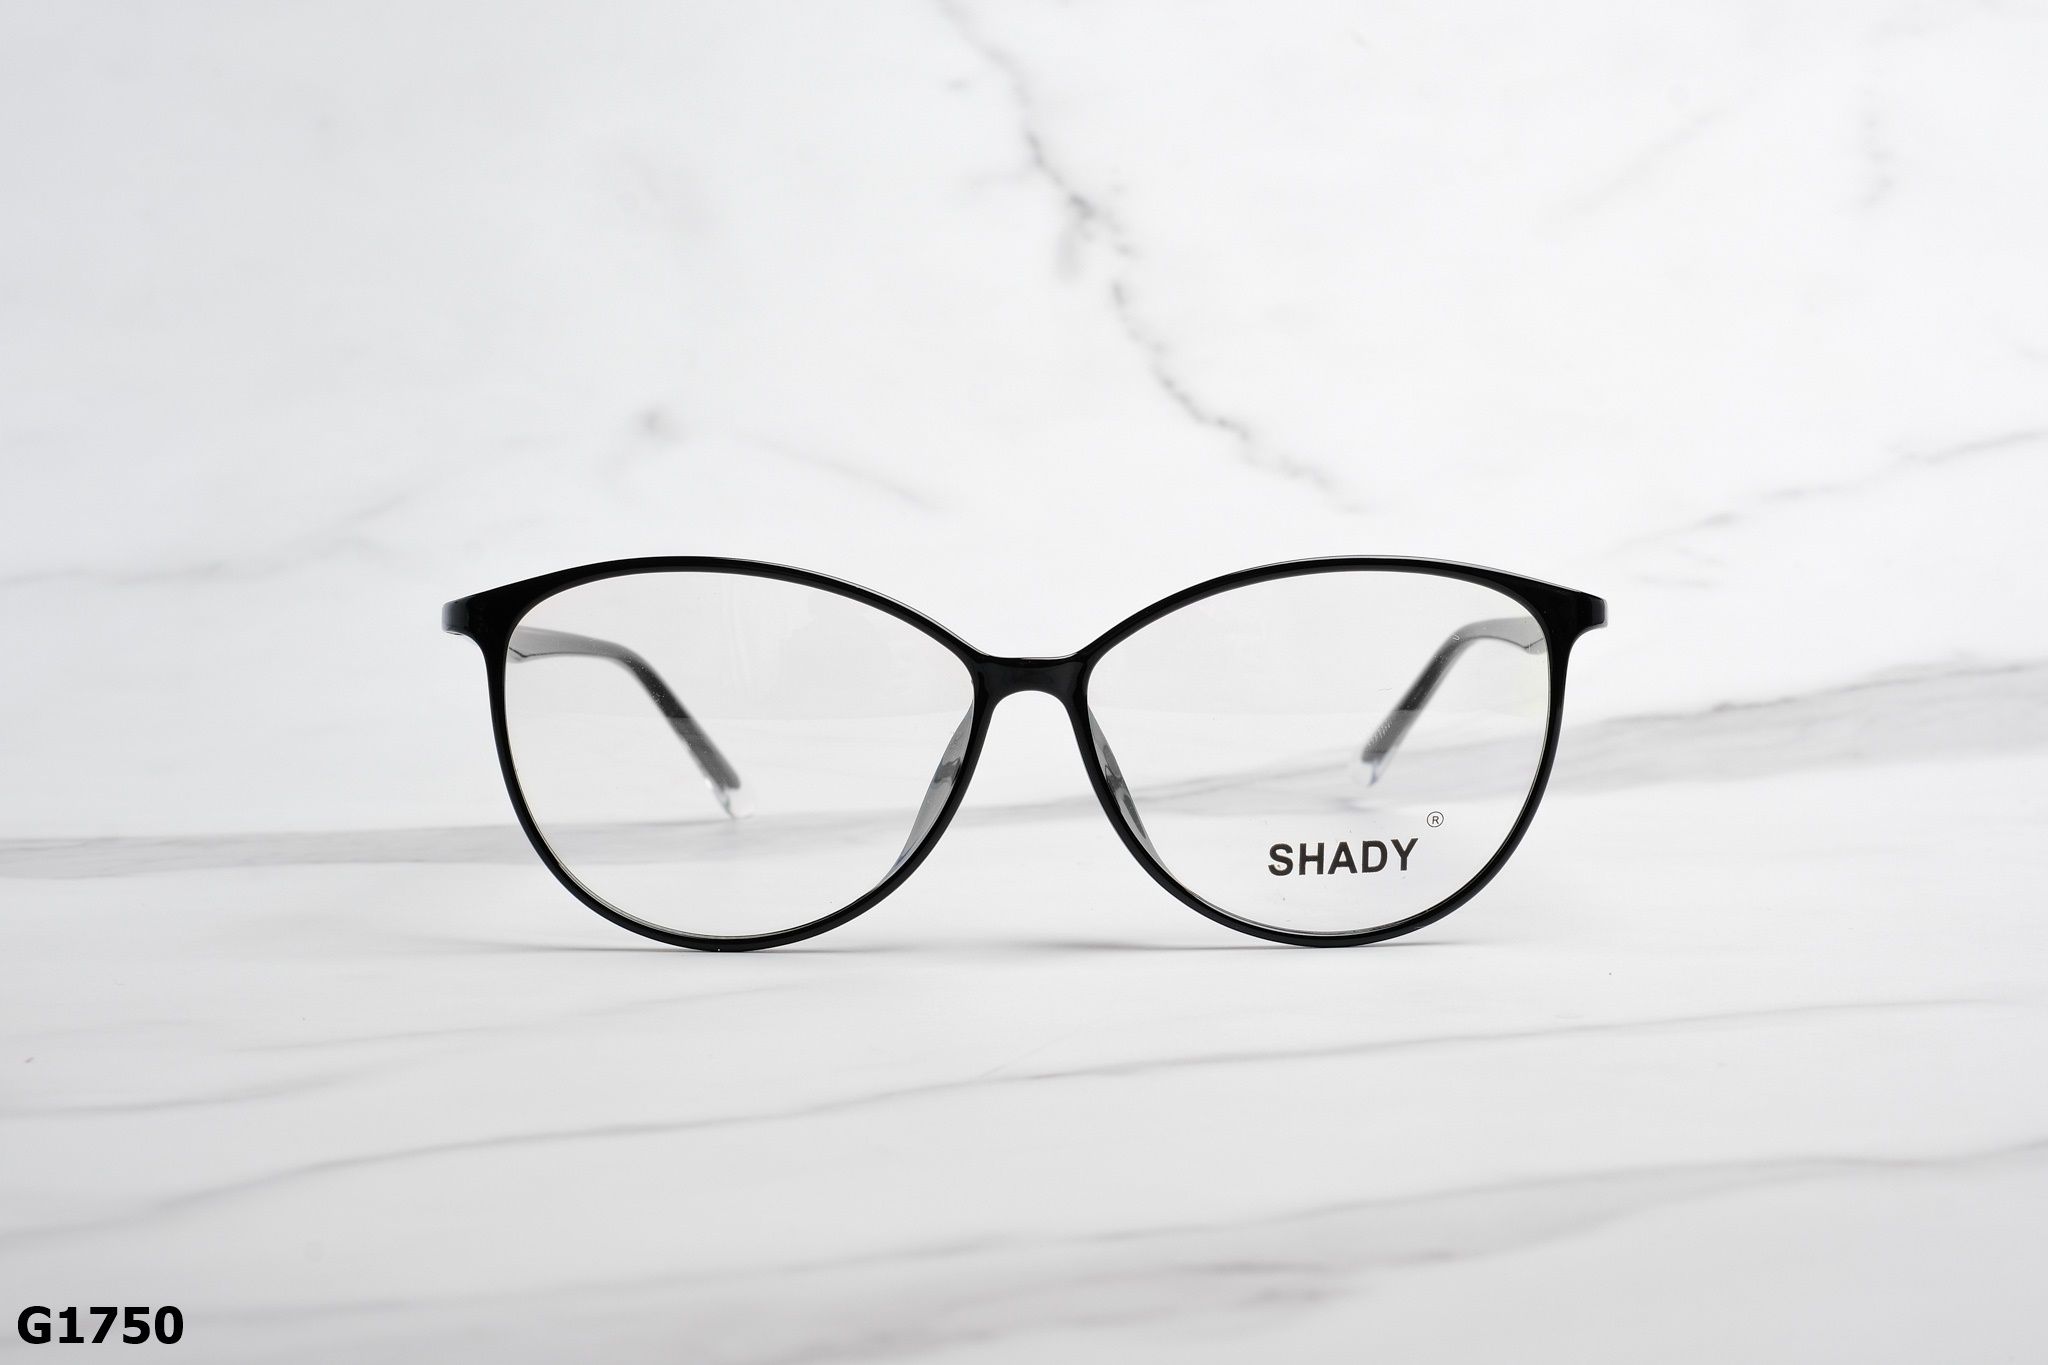  SHADY Eyewear - Glasses - G1750 